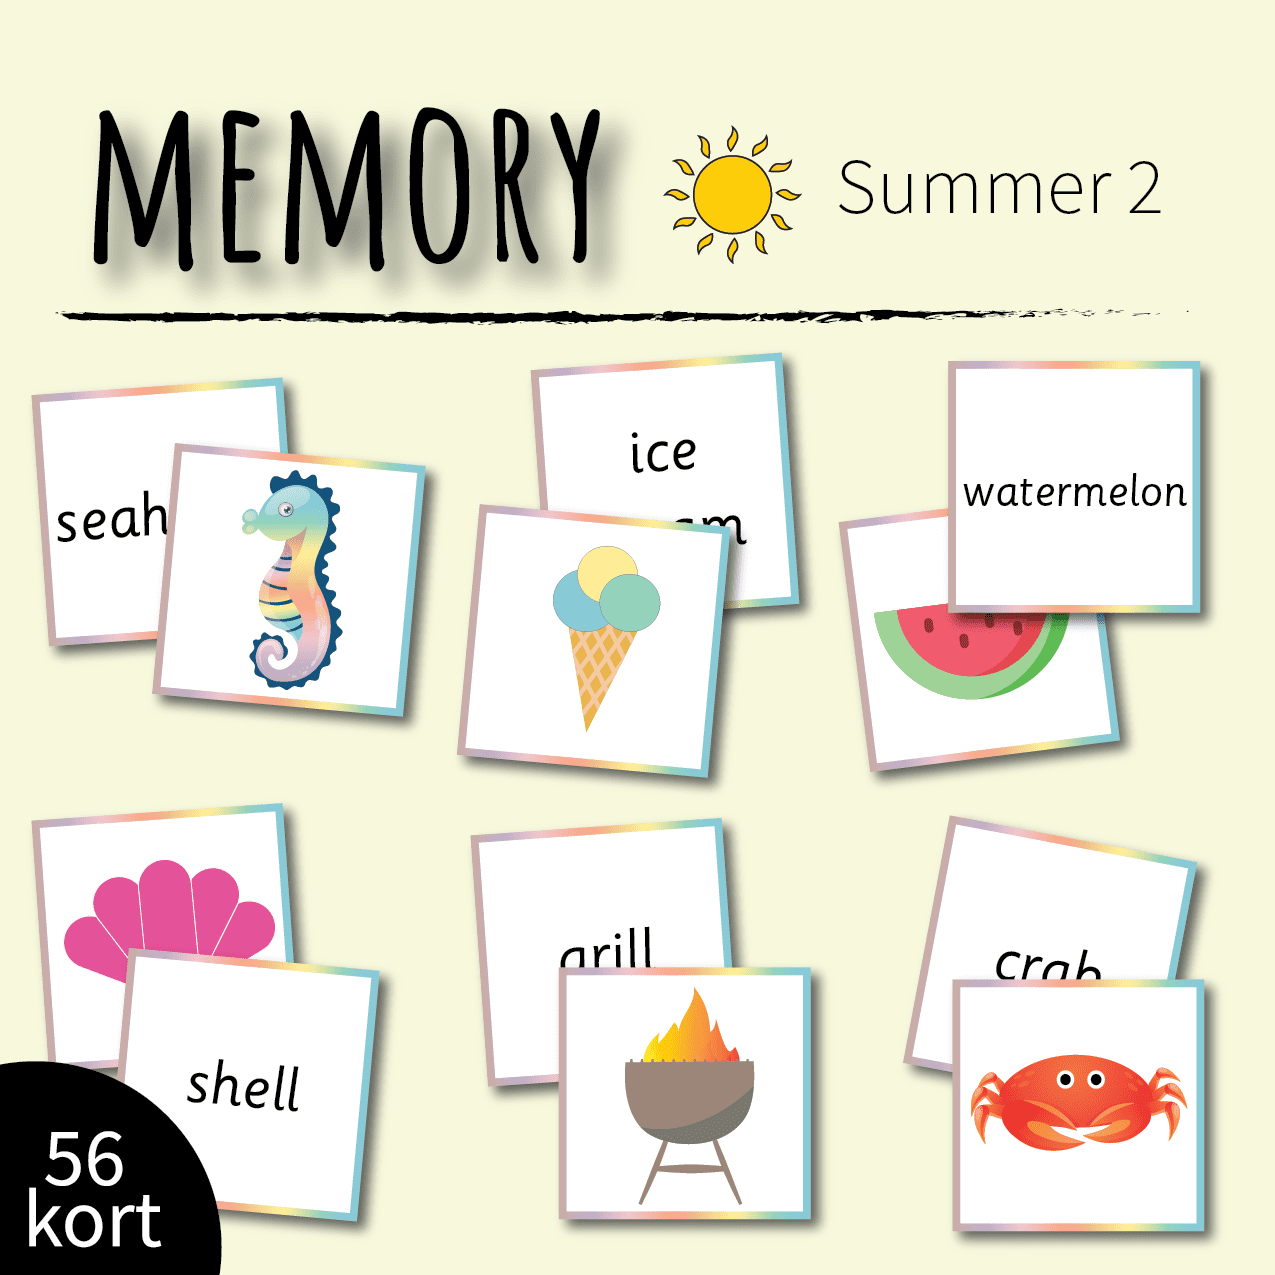 Memory: summer (2)